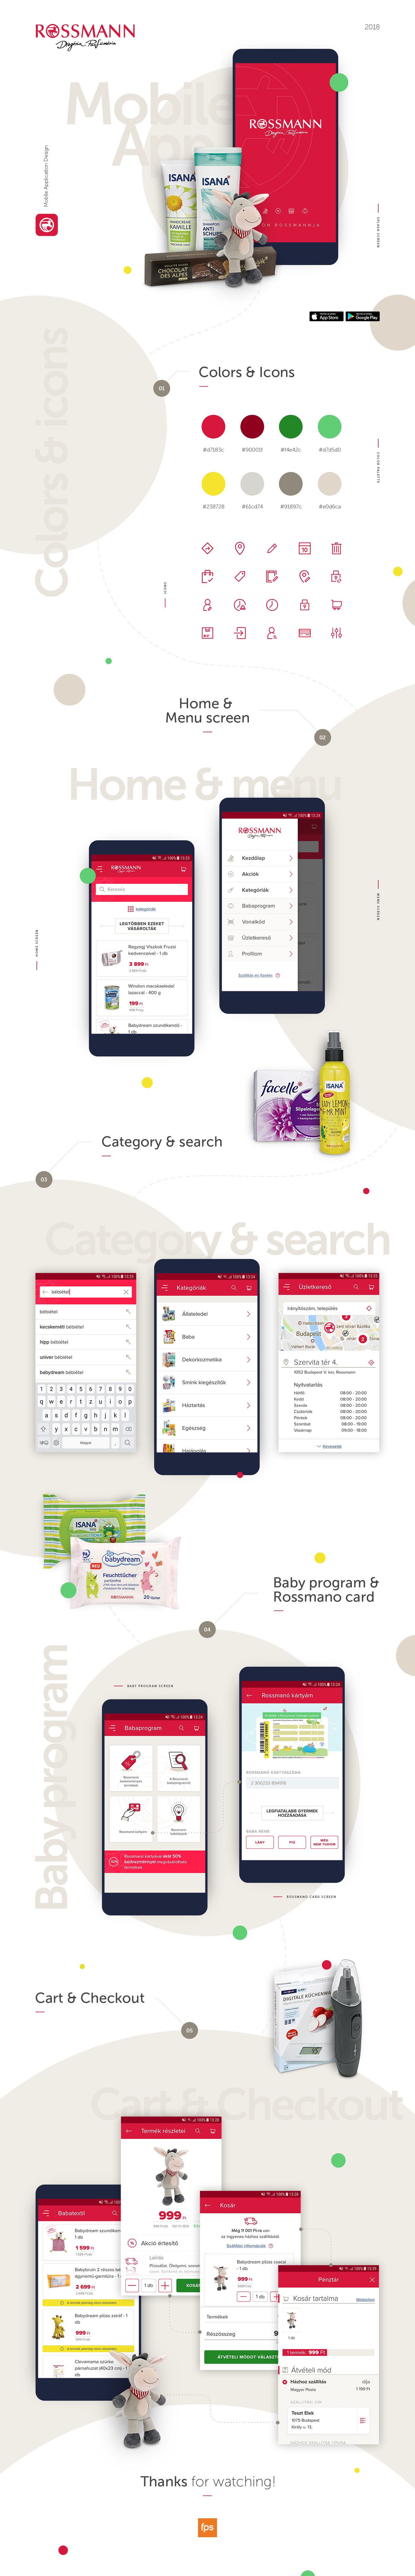 Ecommerce drogerie mobile app design research ux UI